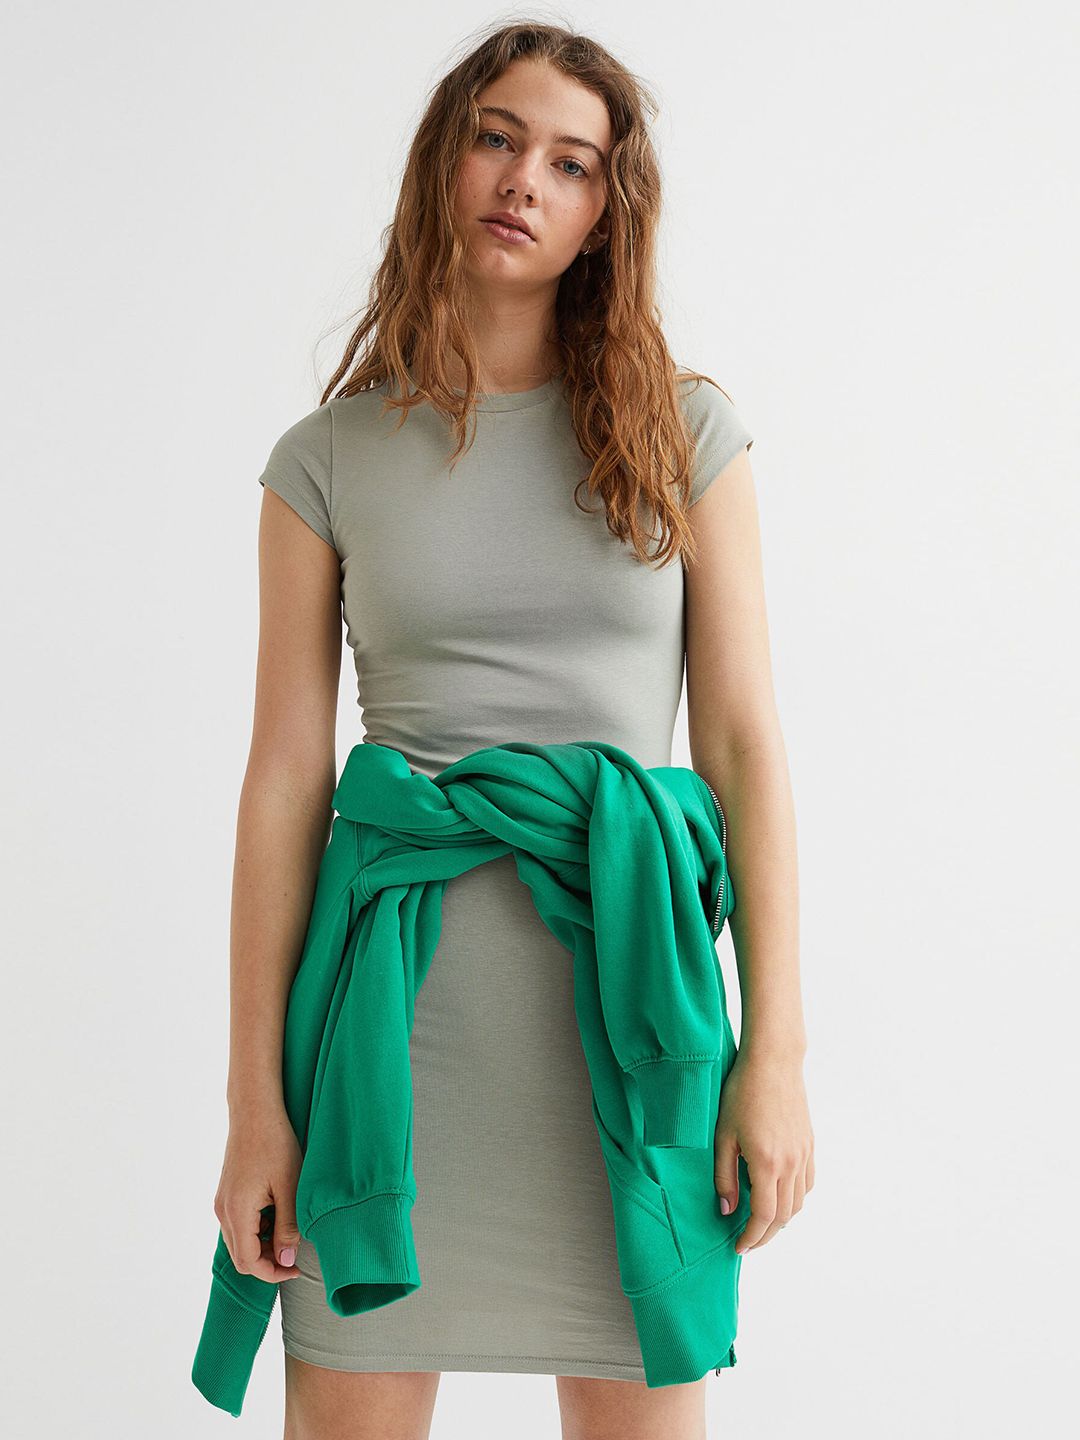 H&M Women Green Cotton Bodycon Dress Price in India